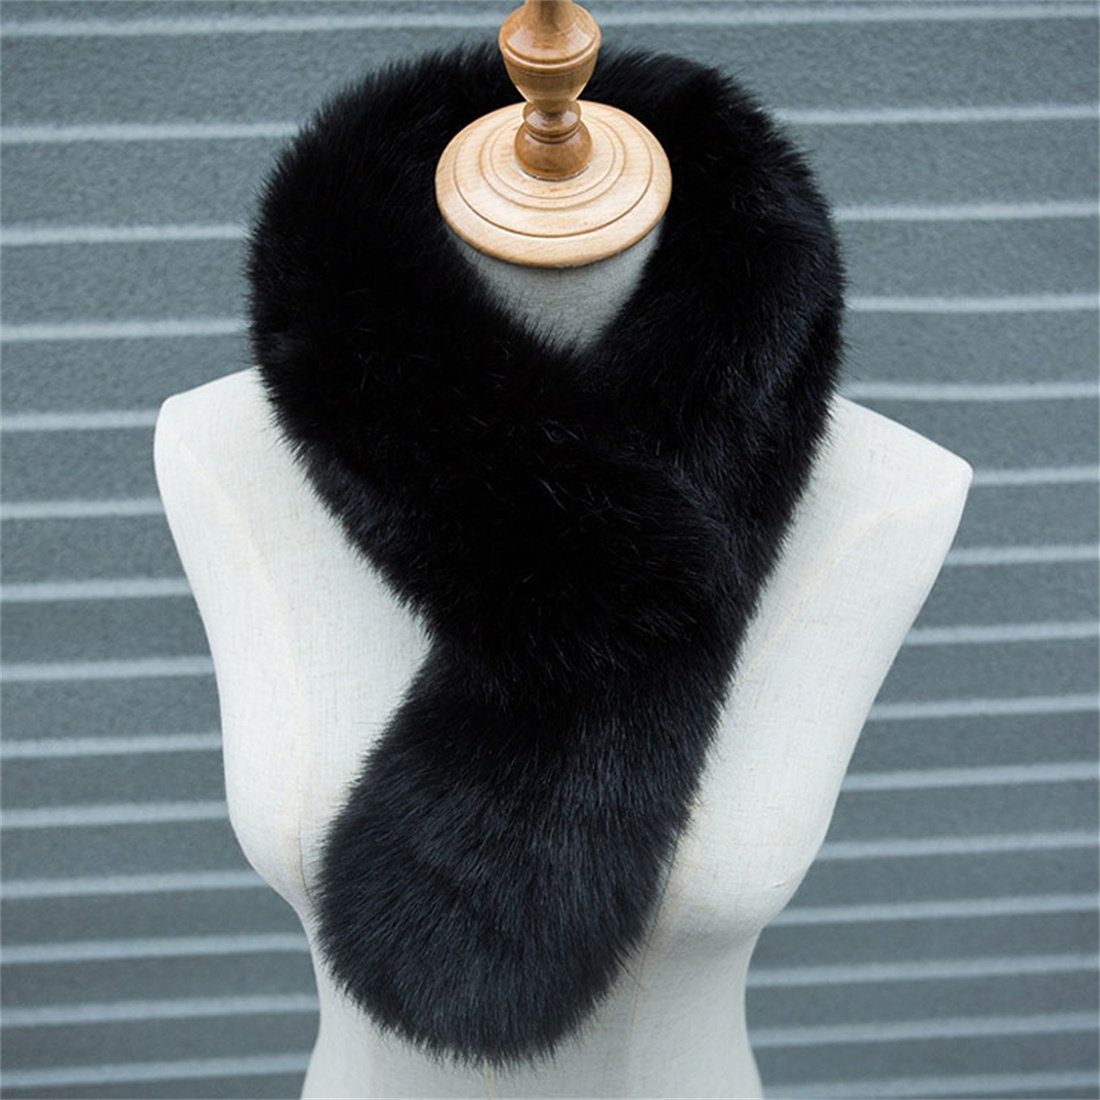 DÖRÖY Modeschal Damen Winter warm verdickt Plüsch Schal,Nachahmung Pelz einfarbigSchal Schwarz